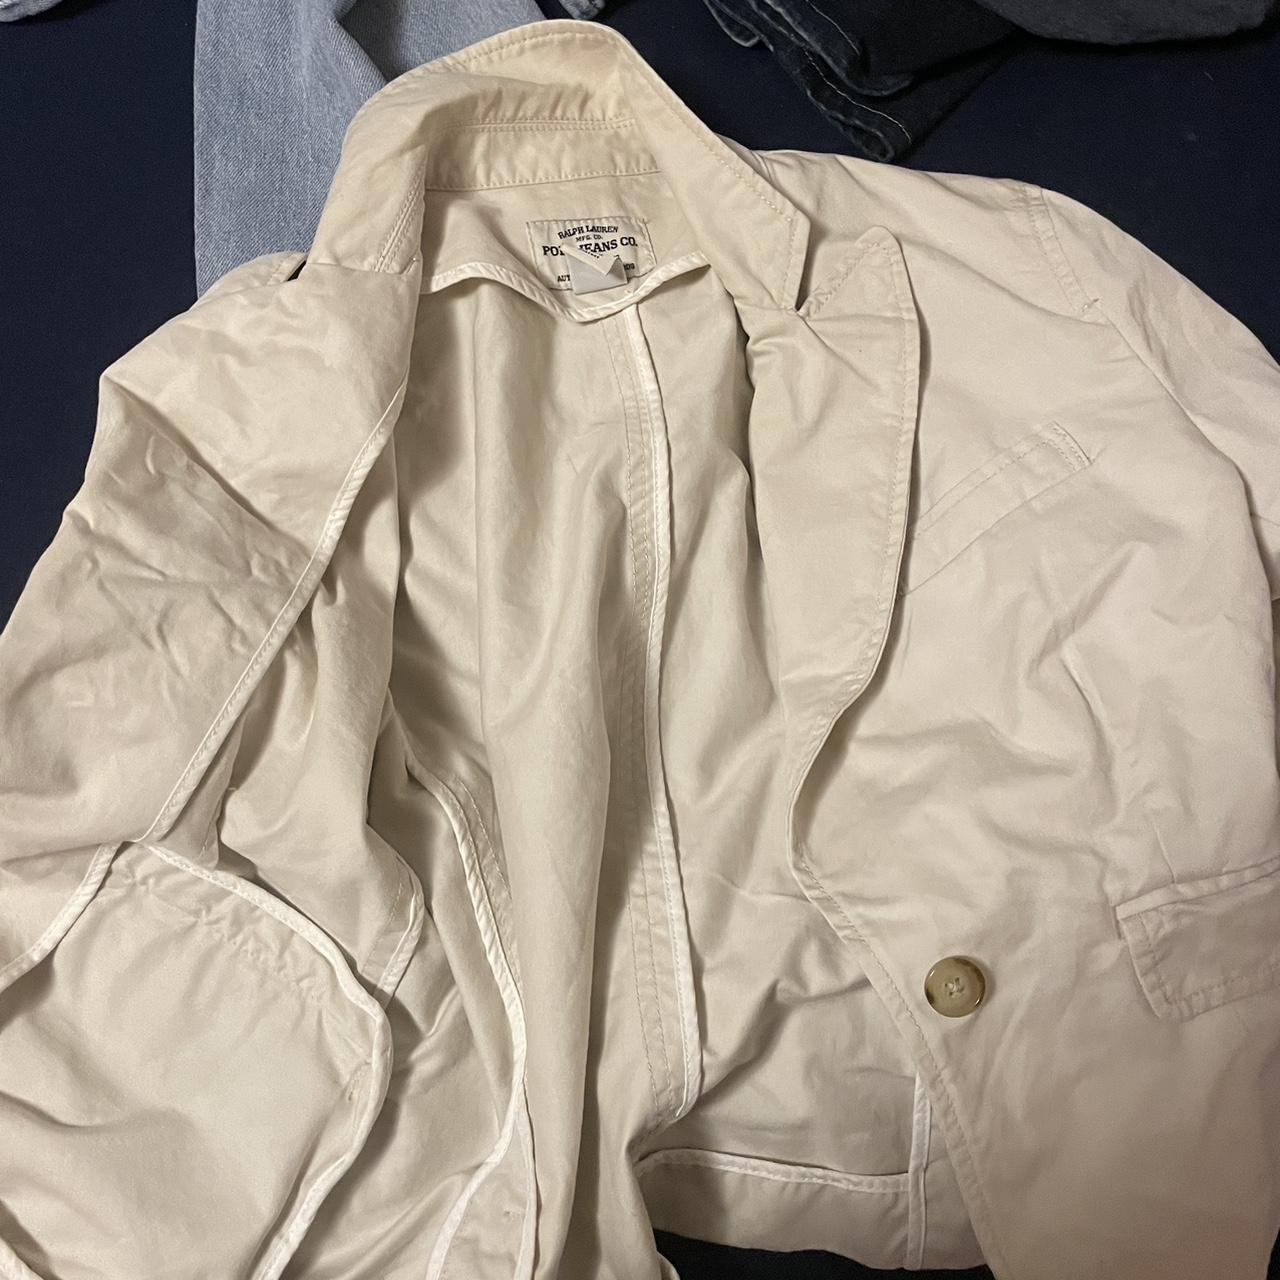 Vintage white casual Ralph Lauren Polo jacket - Depop